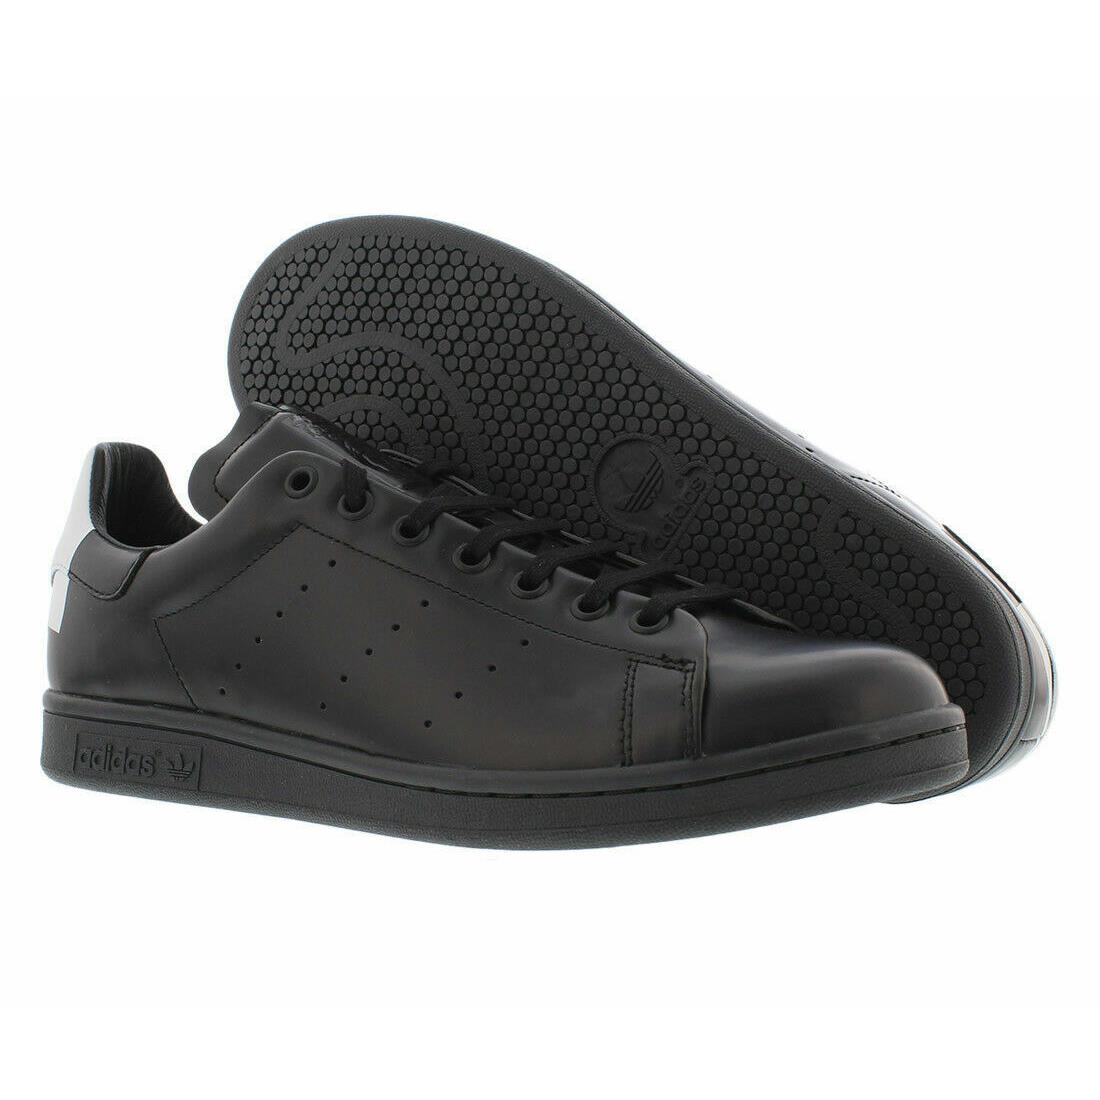 Adidas Stan Smith M20327 All Black Mens Size U.s 10.5